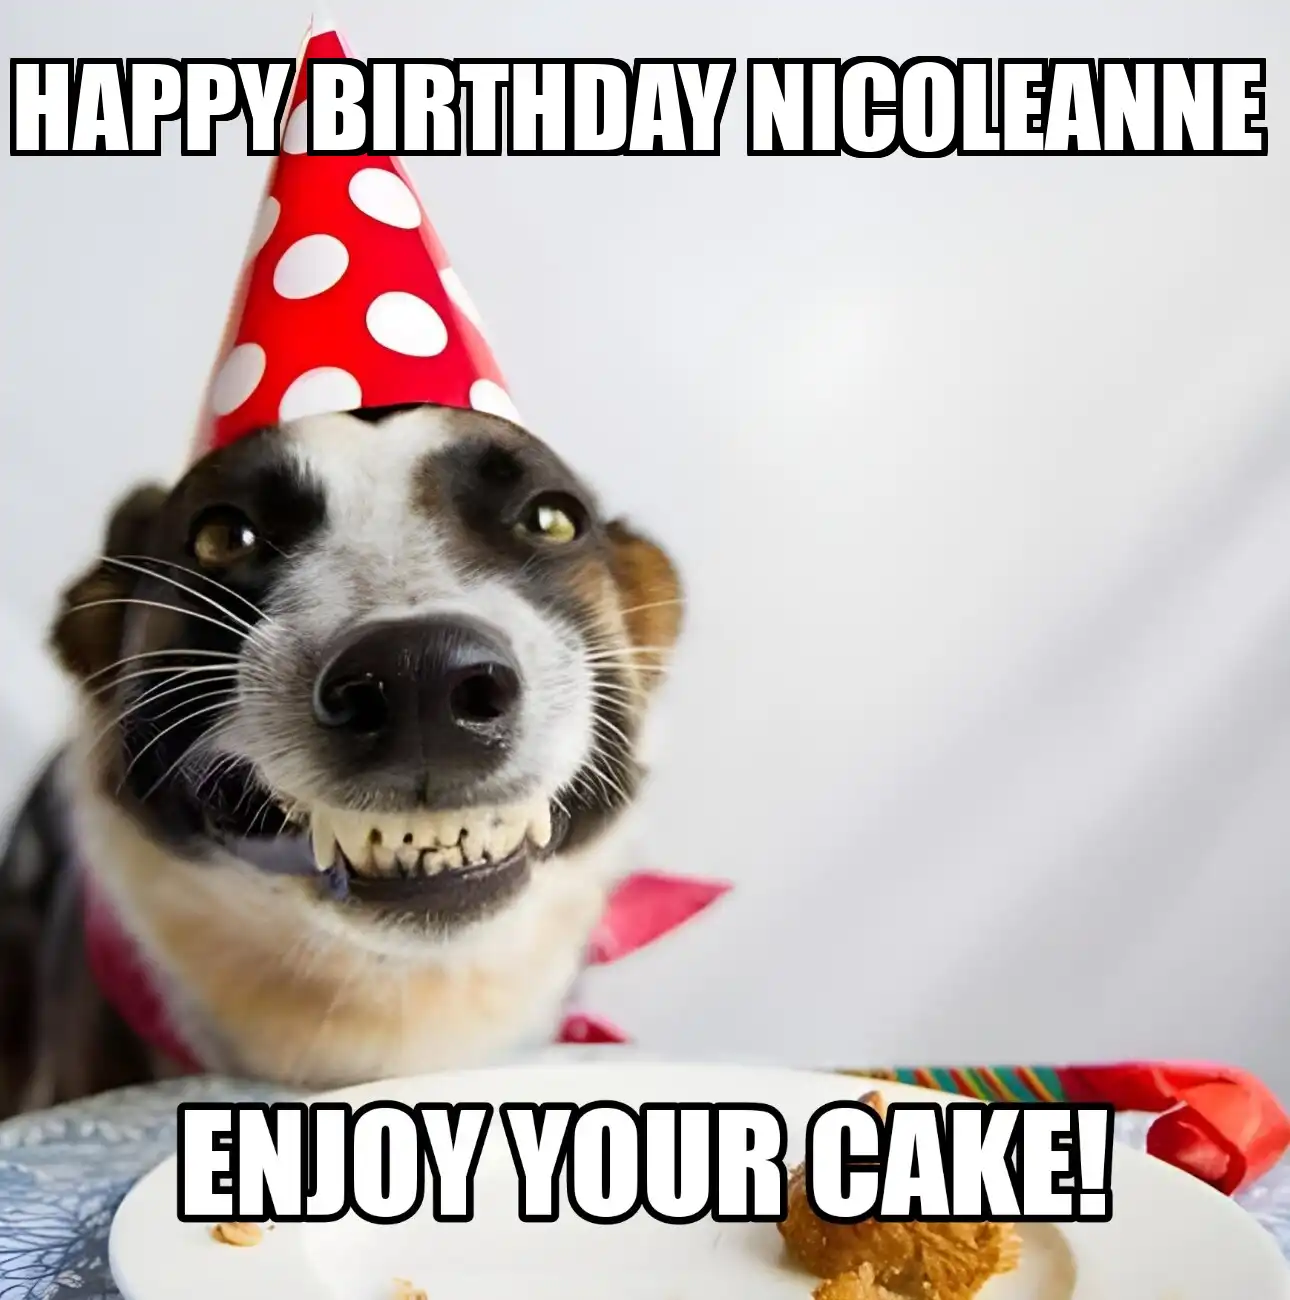 Happy Birthday Nicoleanne Enjoy Your Cake Dog Meme